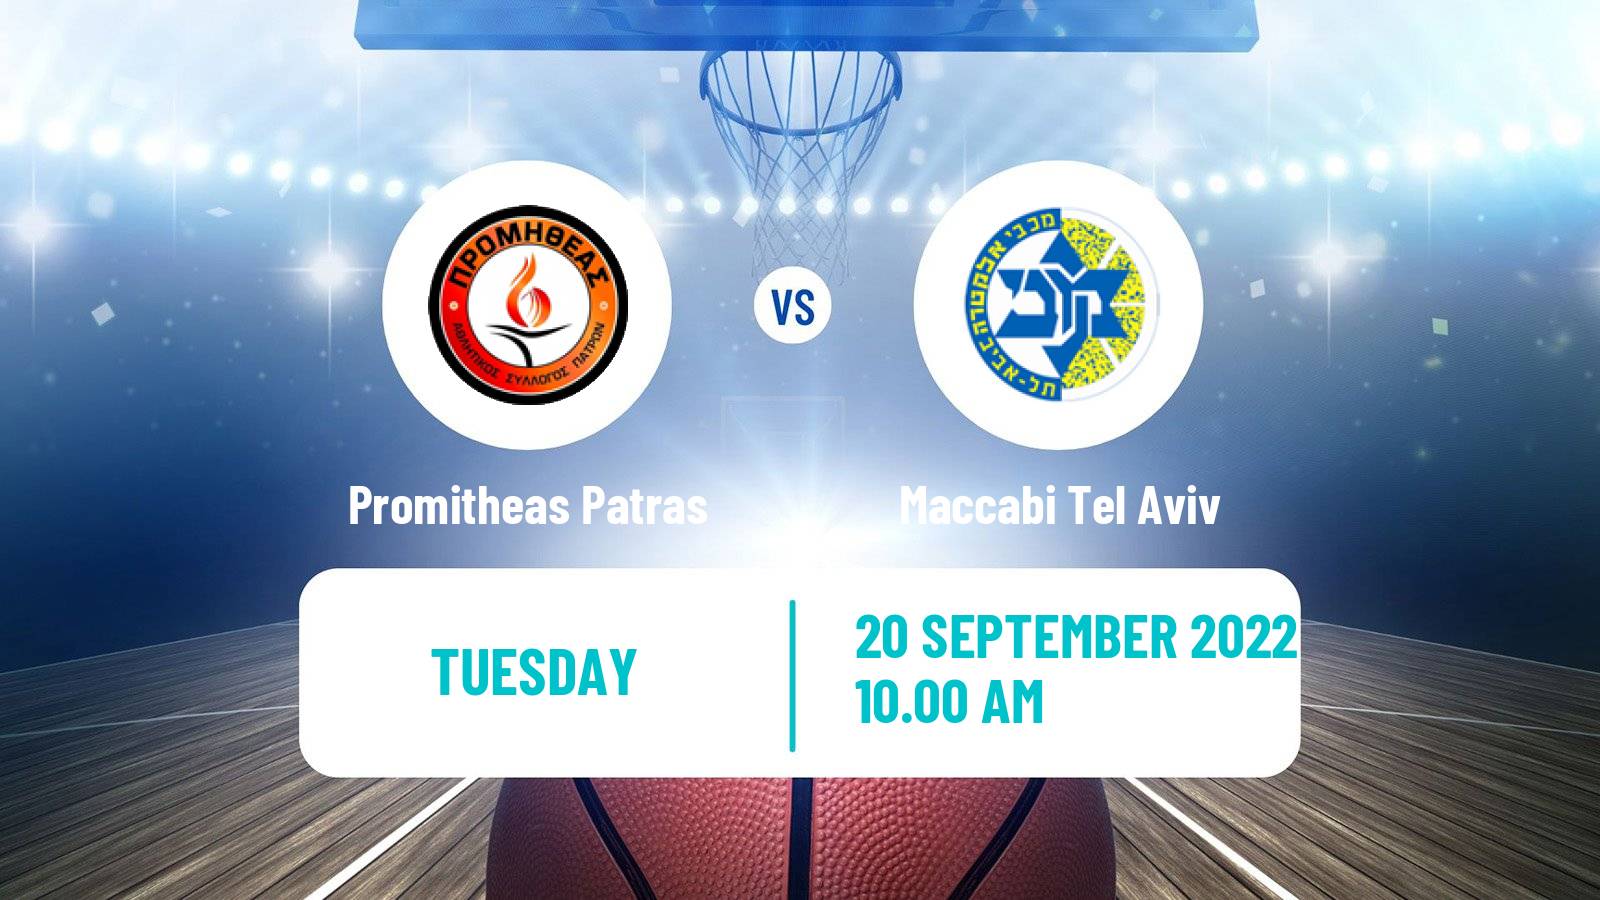 Basketball Club Friendly Basketball Promitheas Patras - Maccabi Tel Aviv